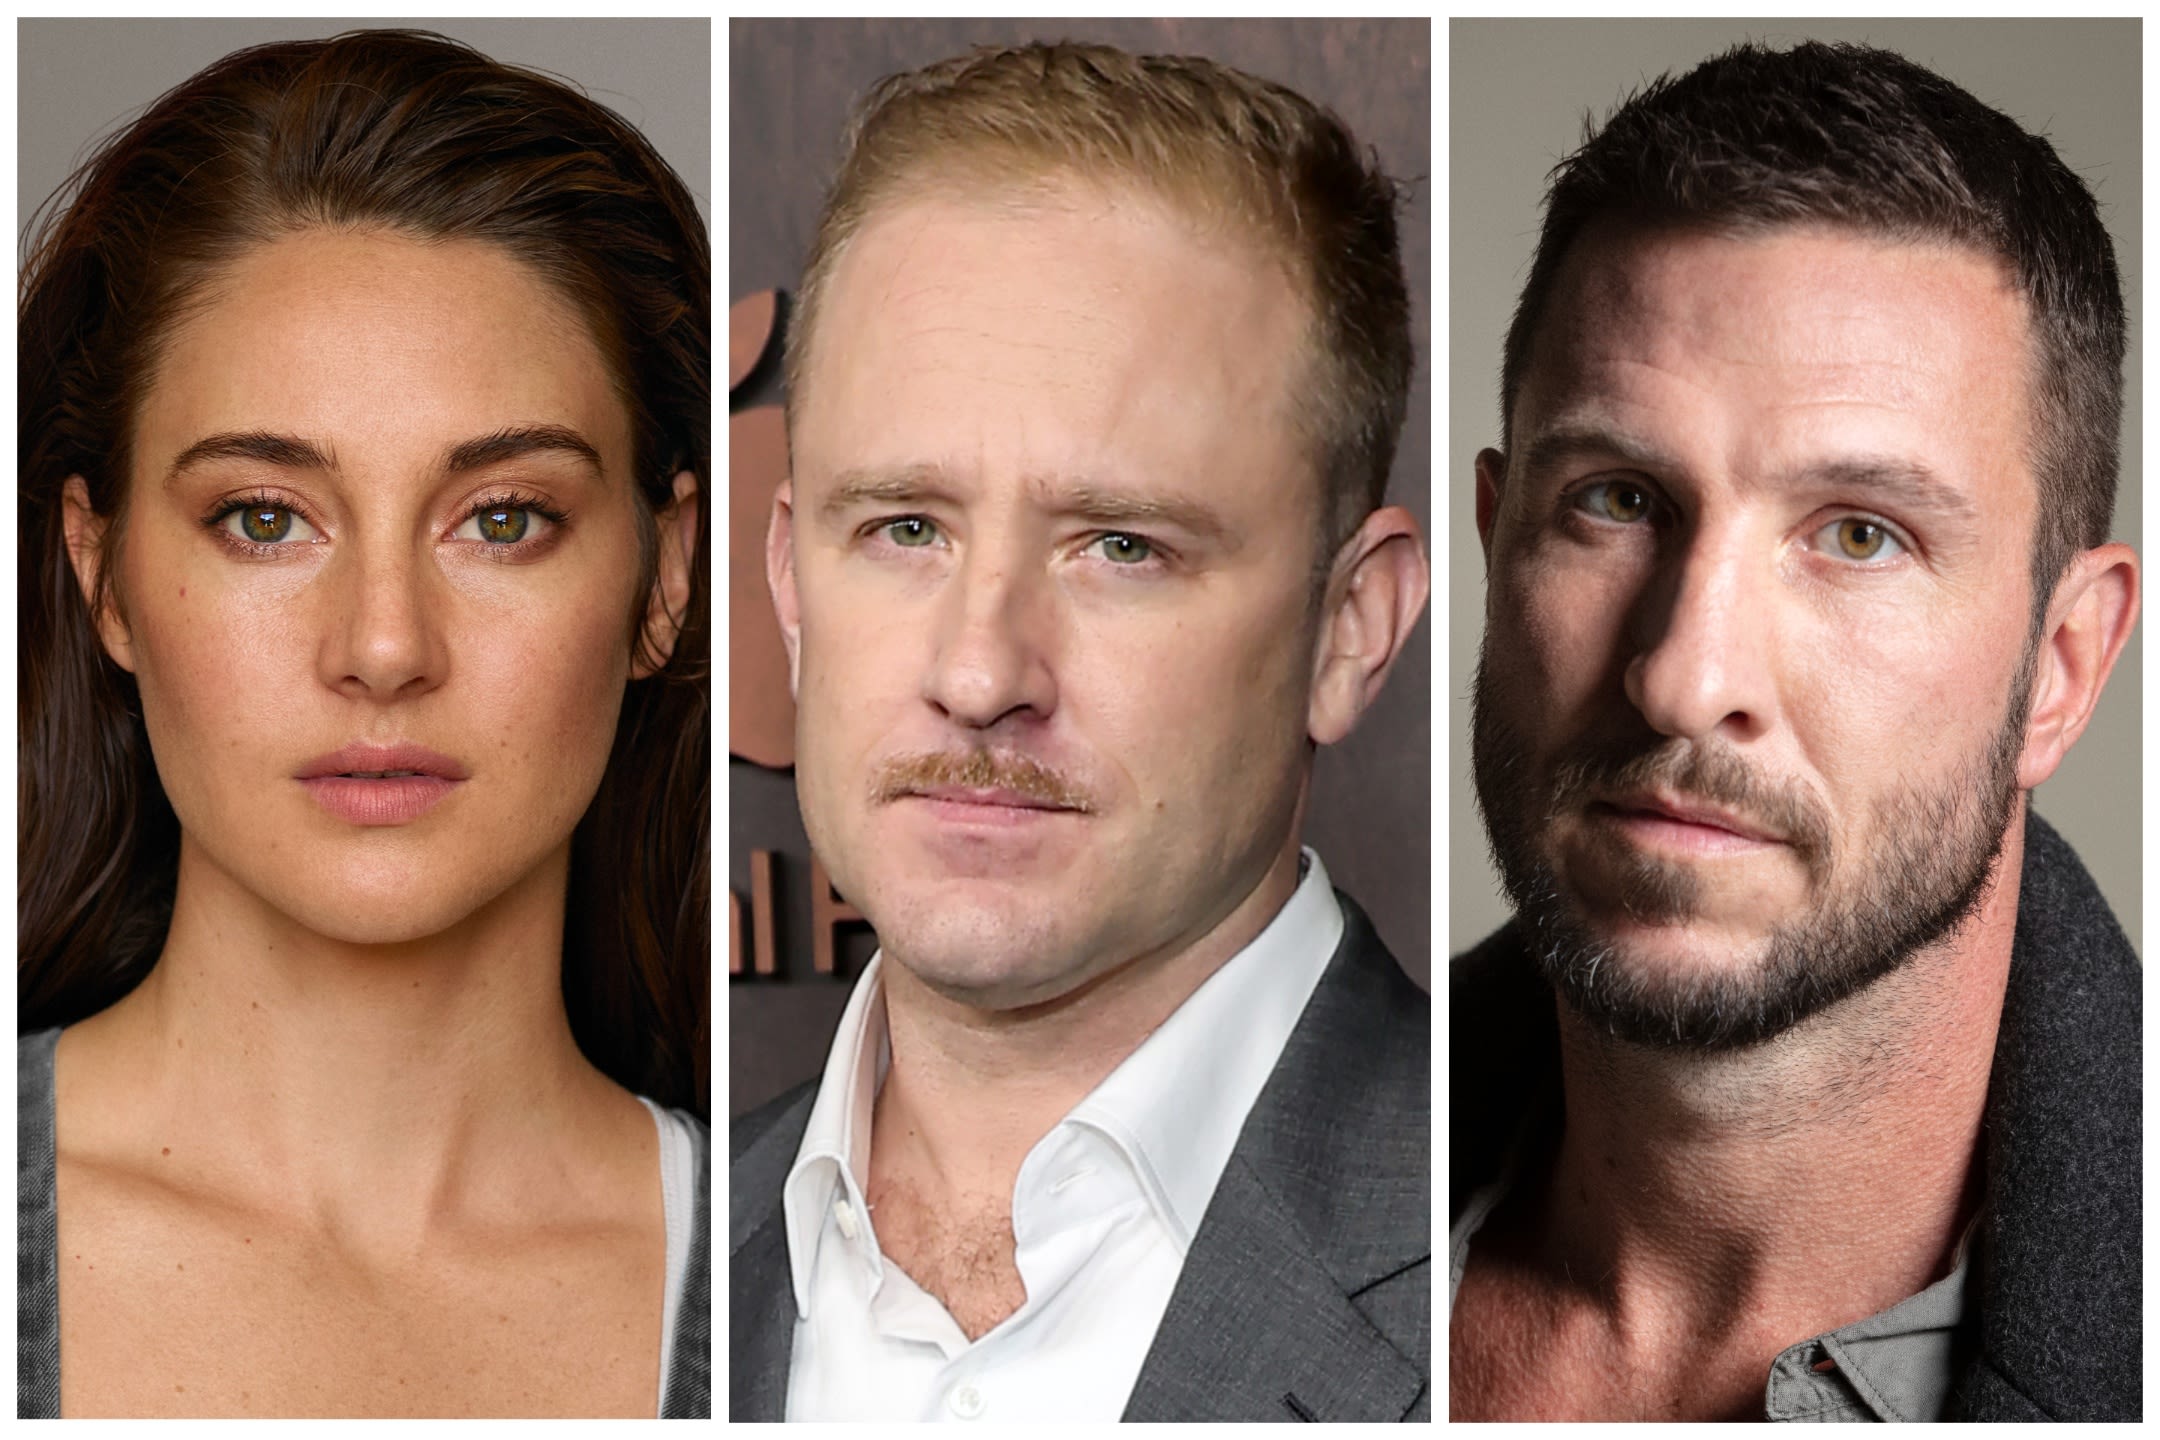 Shailene Woodley, Ben Foster, Pablo Schreiber Join Action Thriller ‘Motor City’ From Stampede Ventures (EXCLUSIVE)